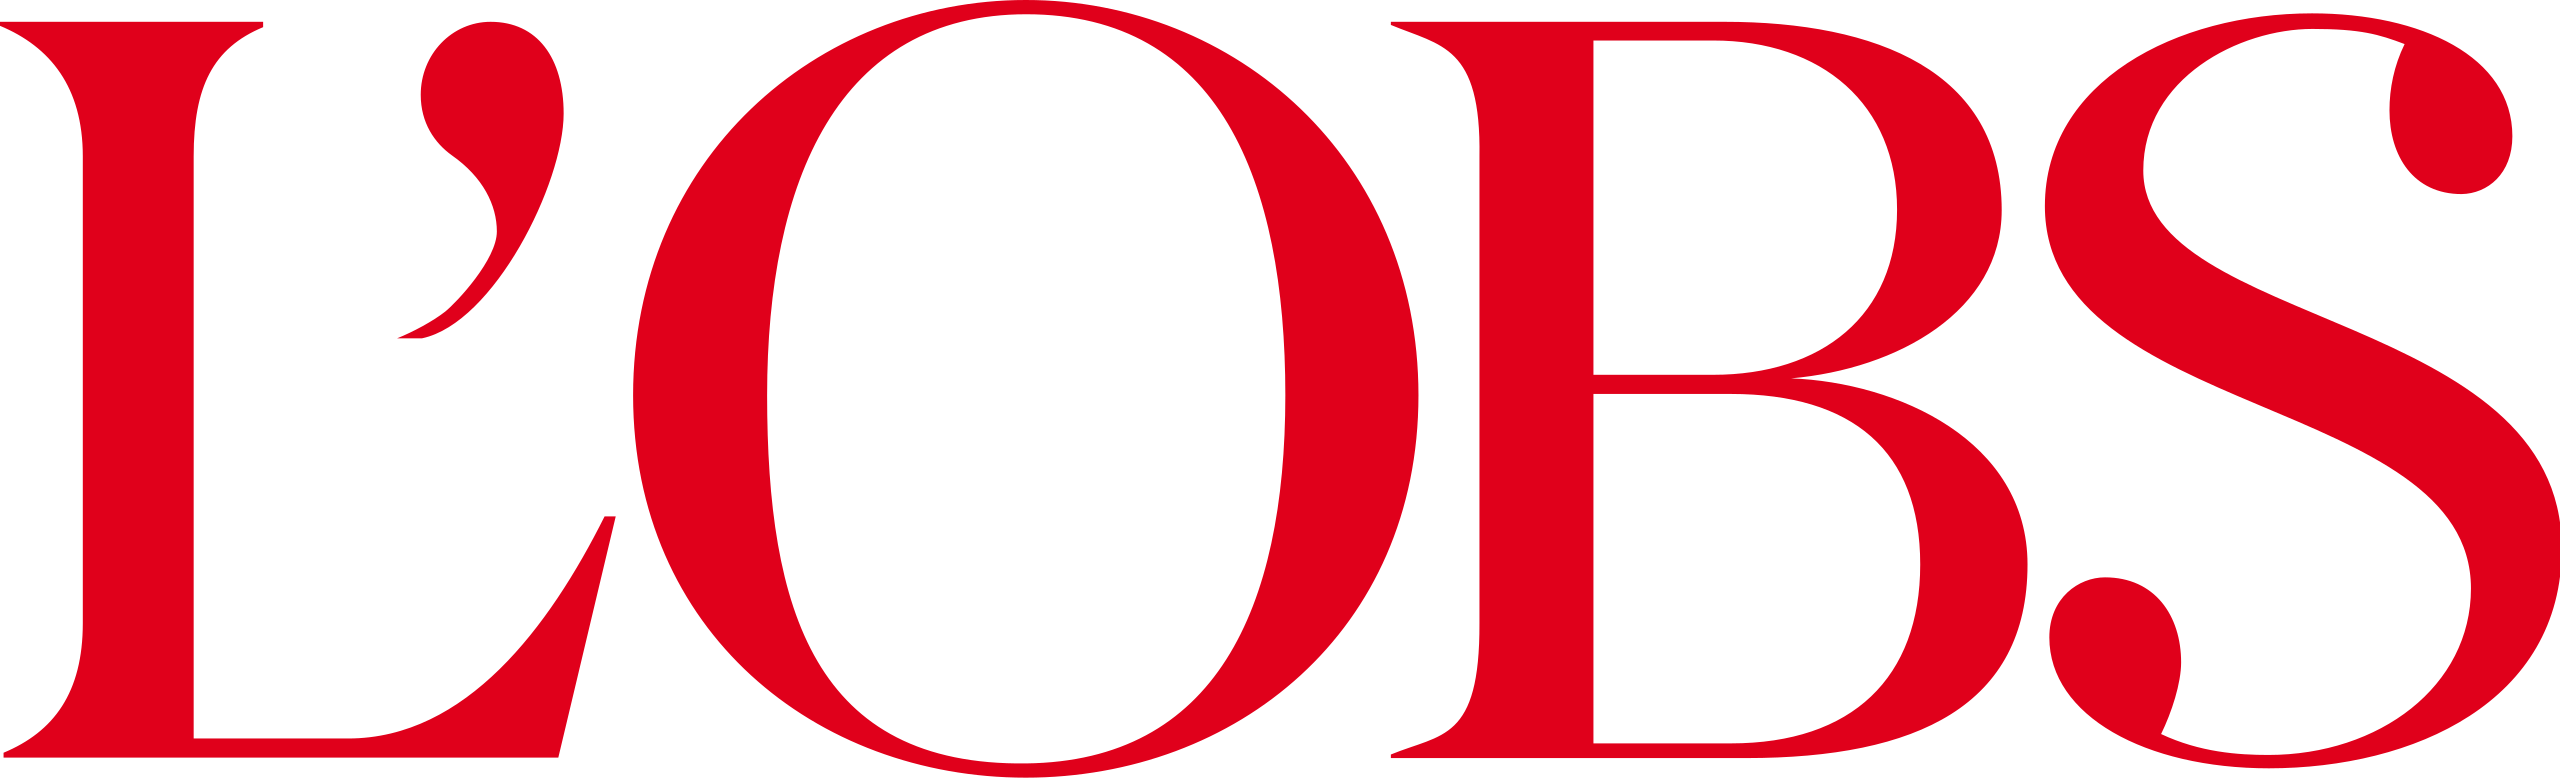 Obs_2014_logo.svg